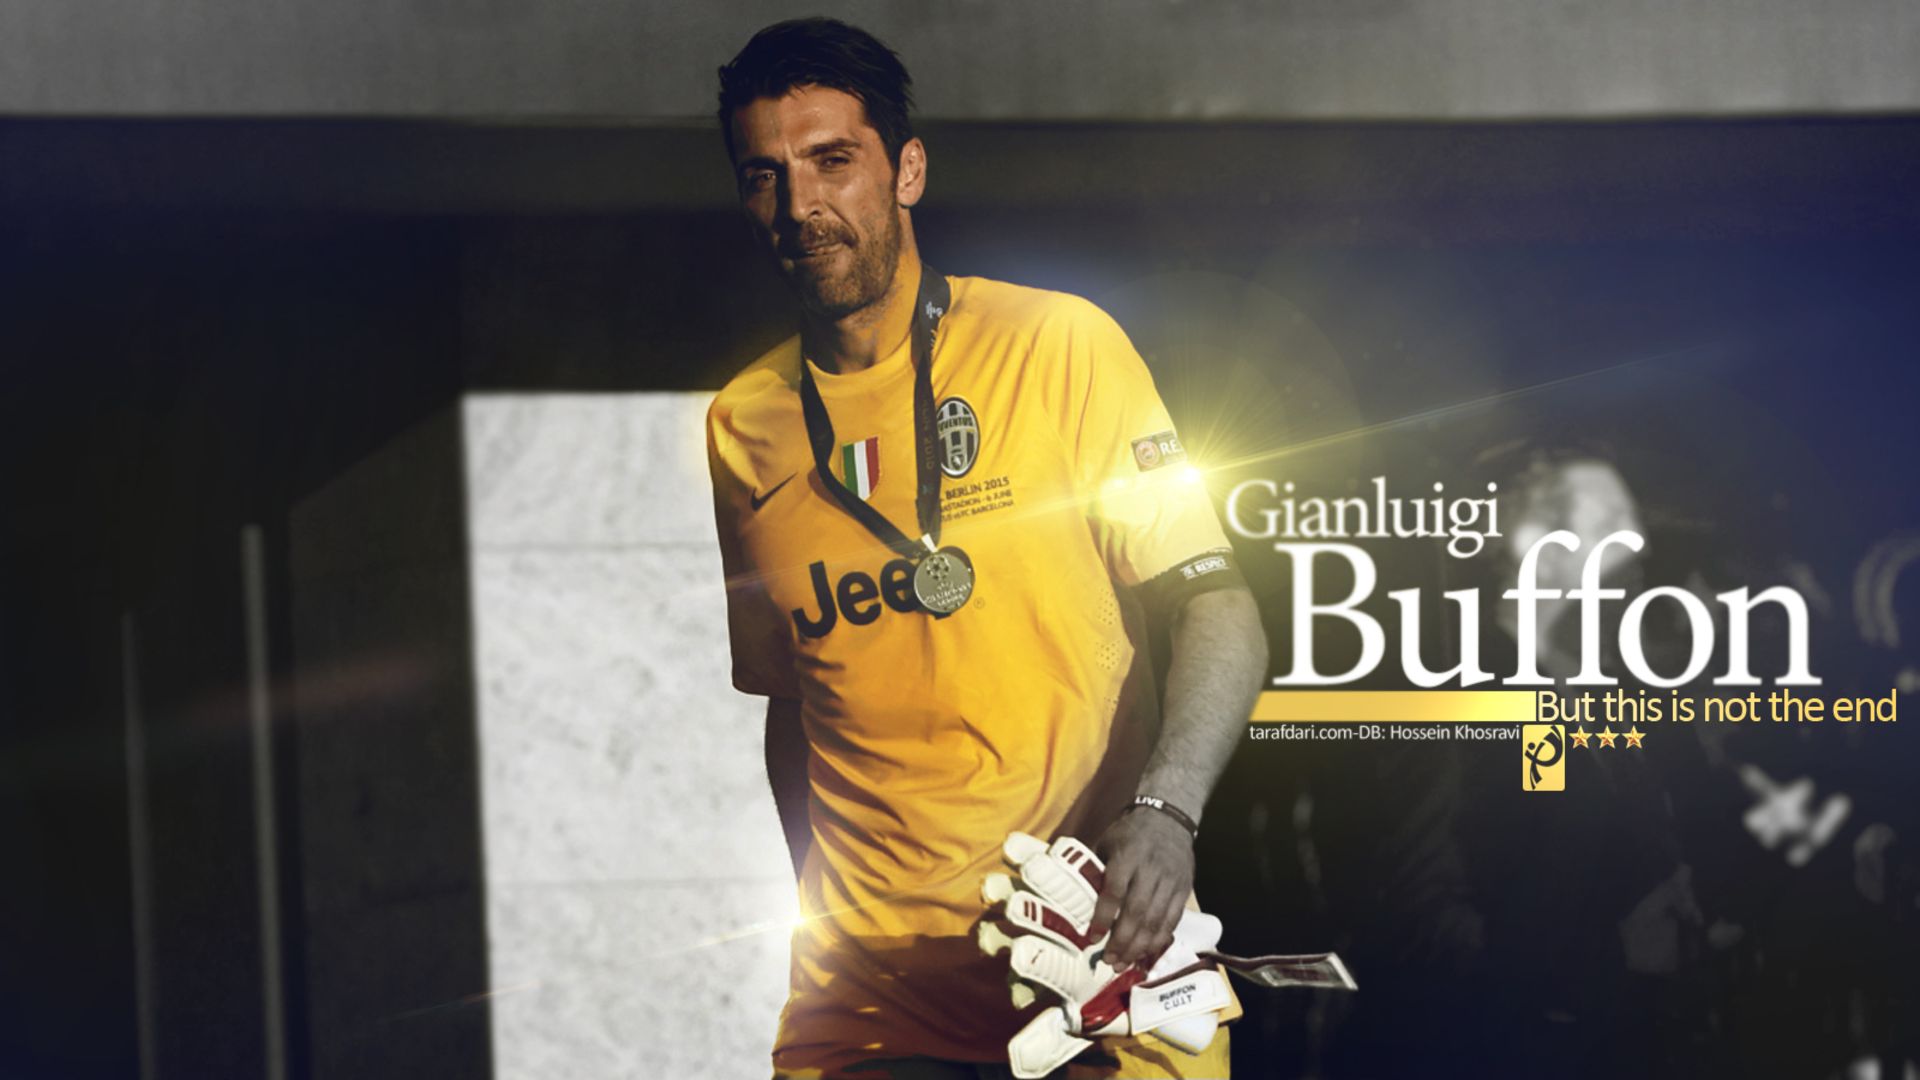 HD desktop wallpaper: Sports, Soccer, Juventus F C, Gianluigi Buffon  download free picture #508440